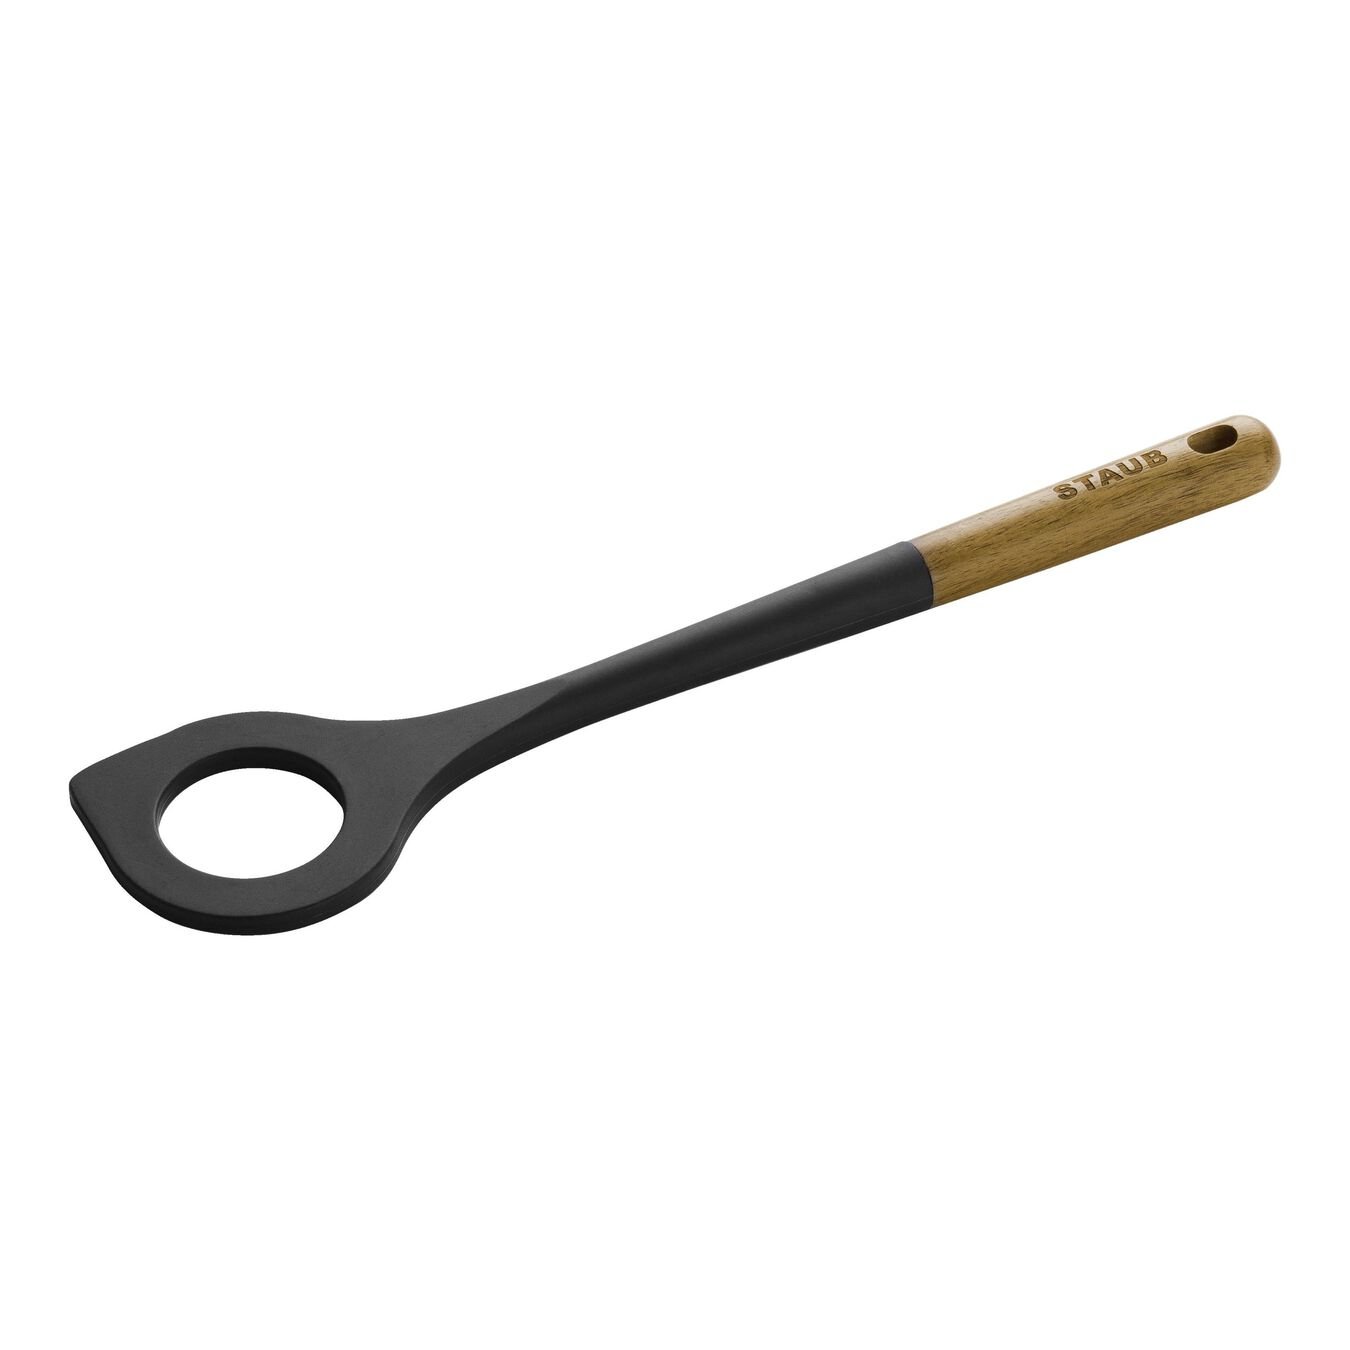 31 cm silicone Risotto spoon, black,,large 1